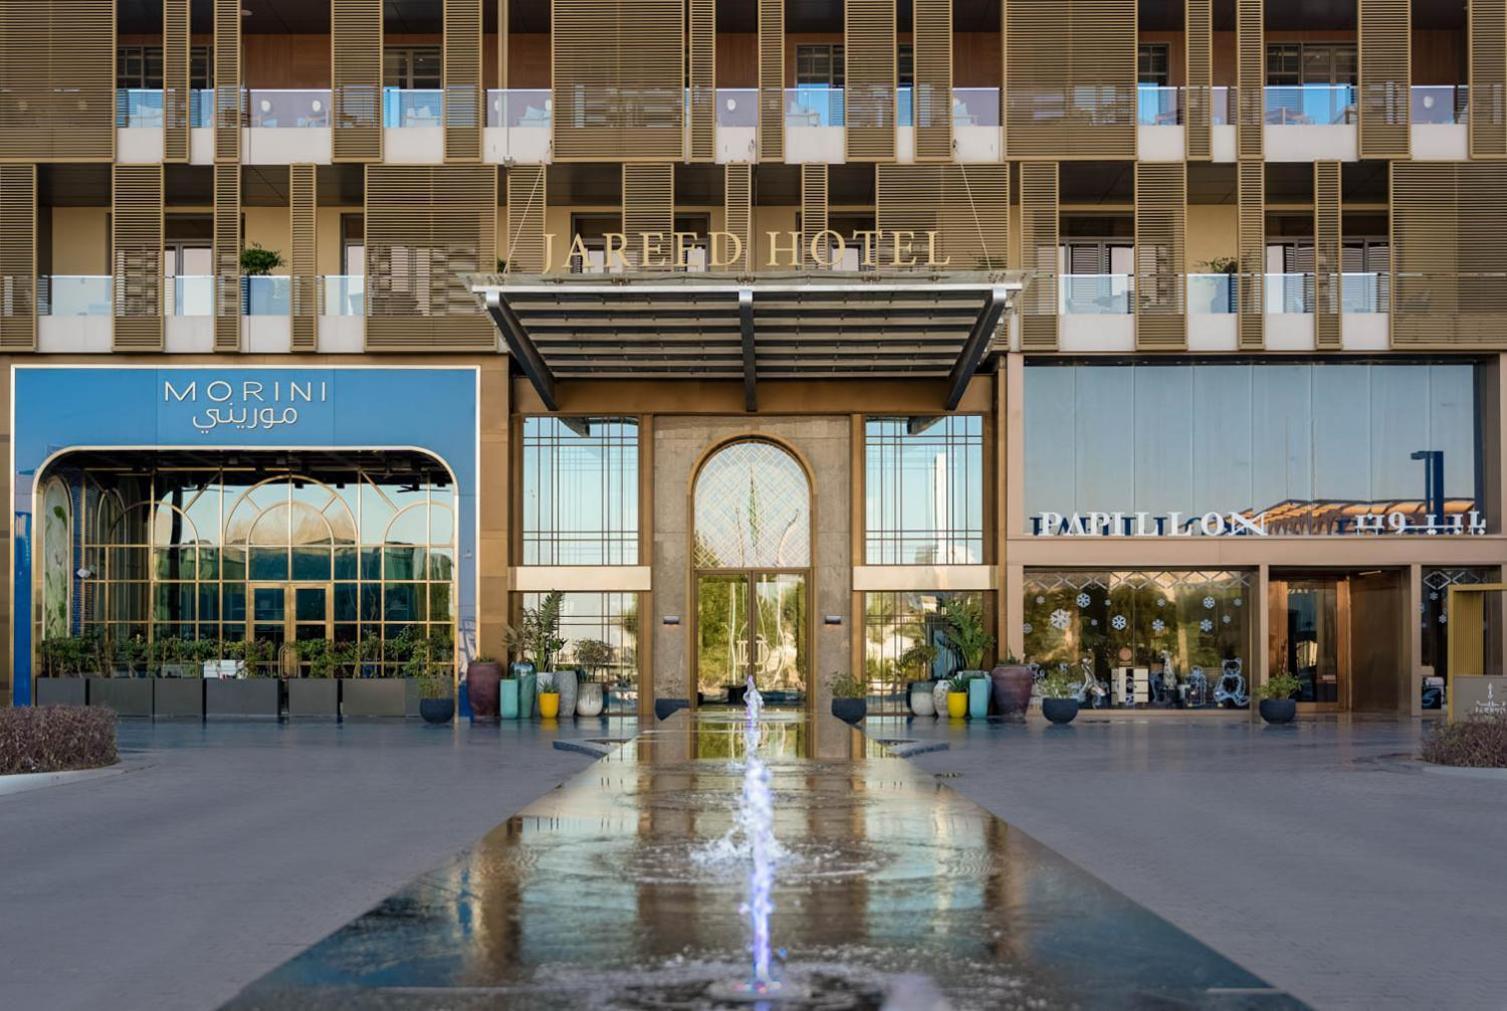 Jareed Hotel Riad Exterior foto